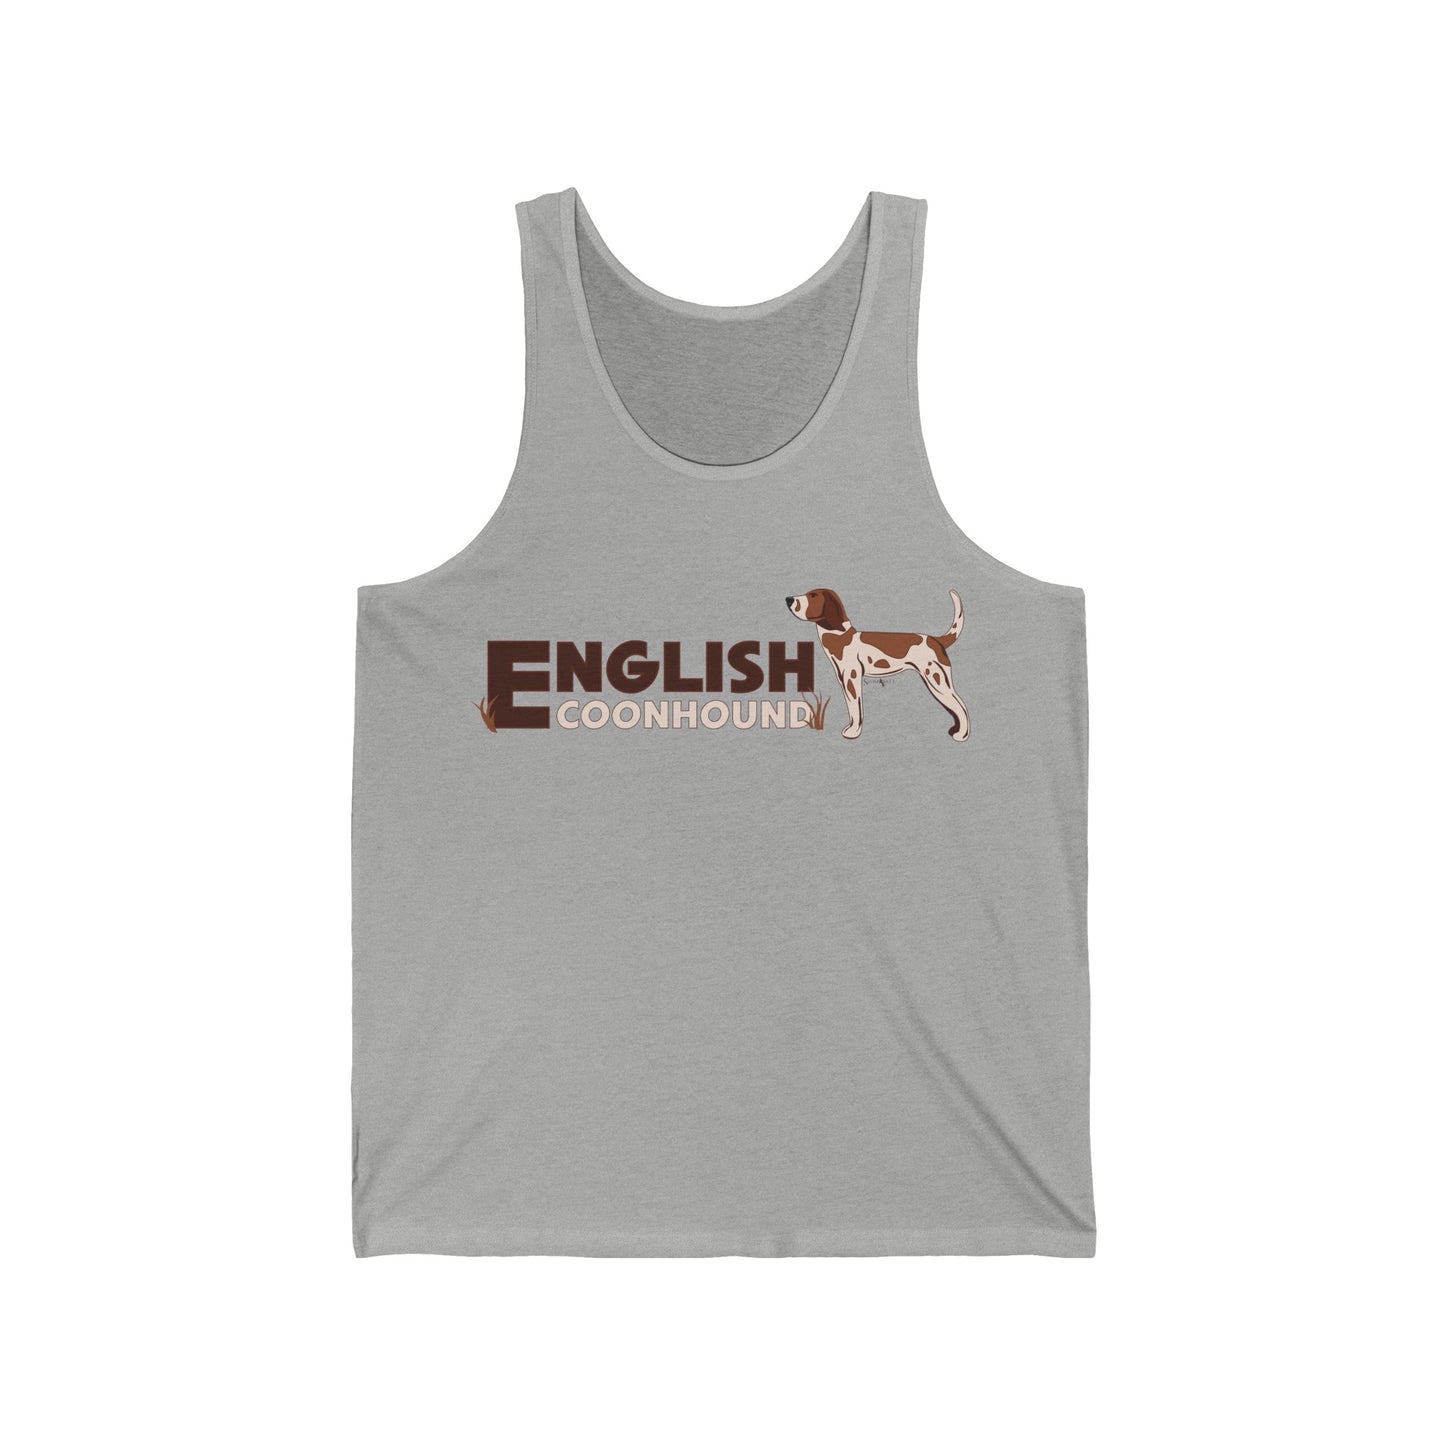 English Coonhound tank